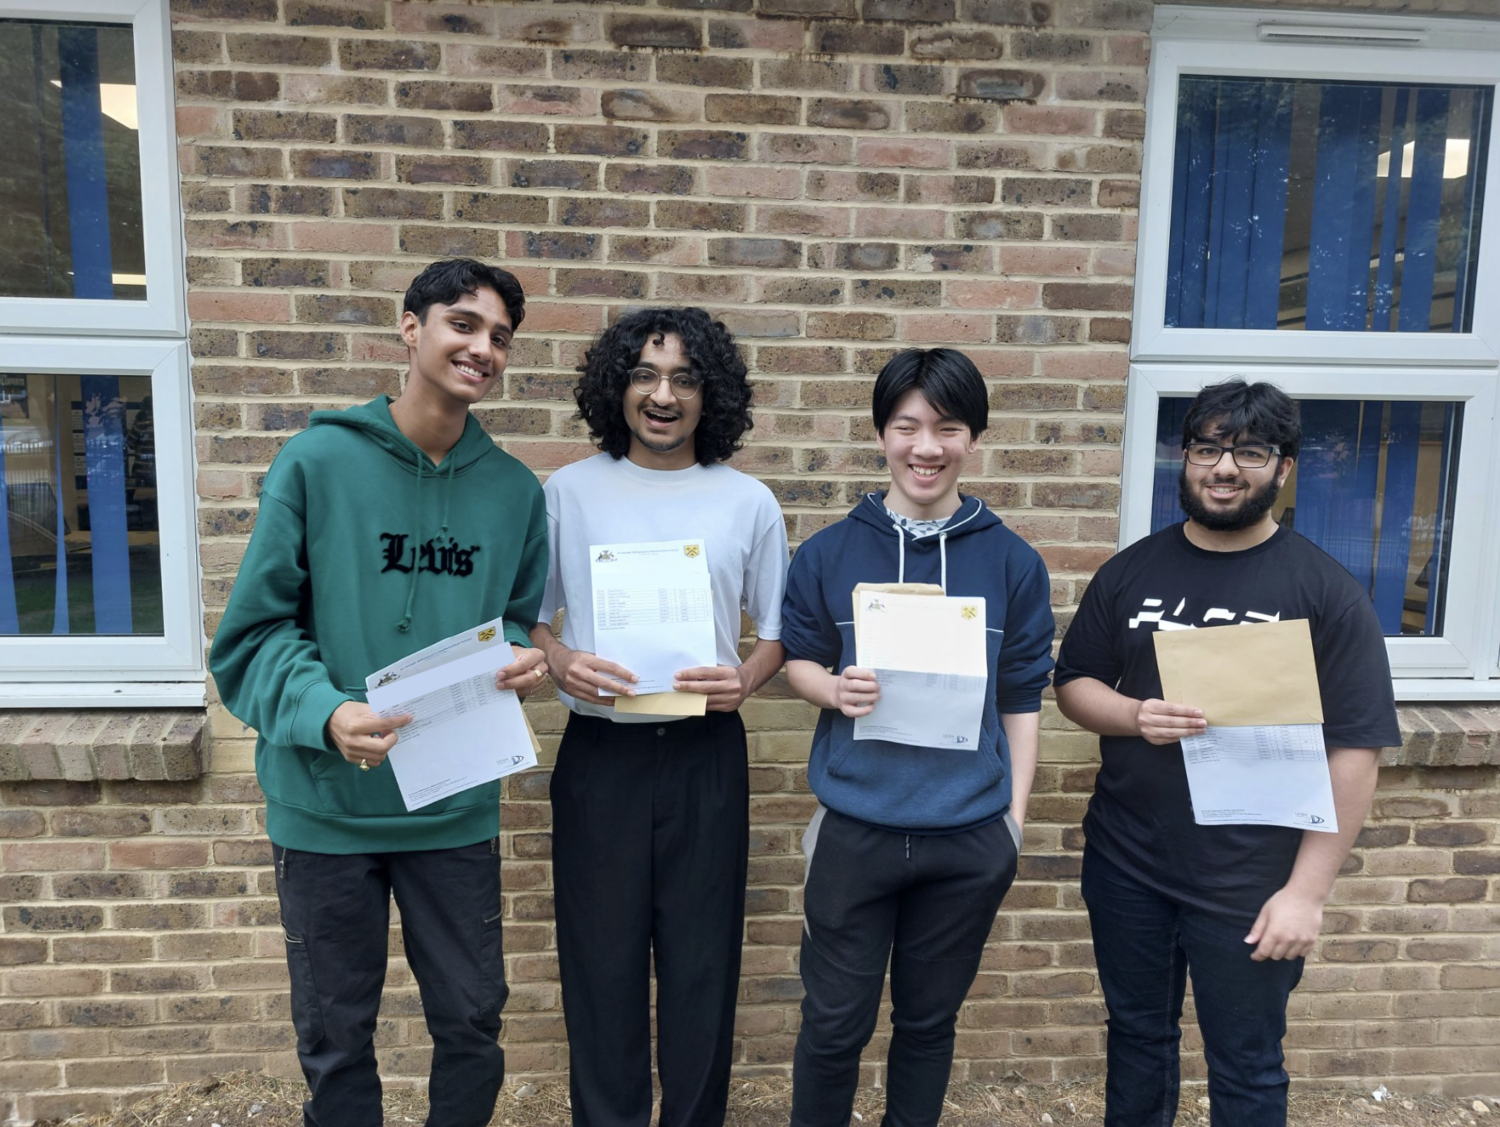 Anish, Hashim, Matthew and Adam holding their results